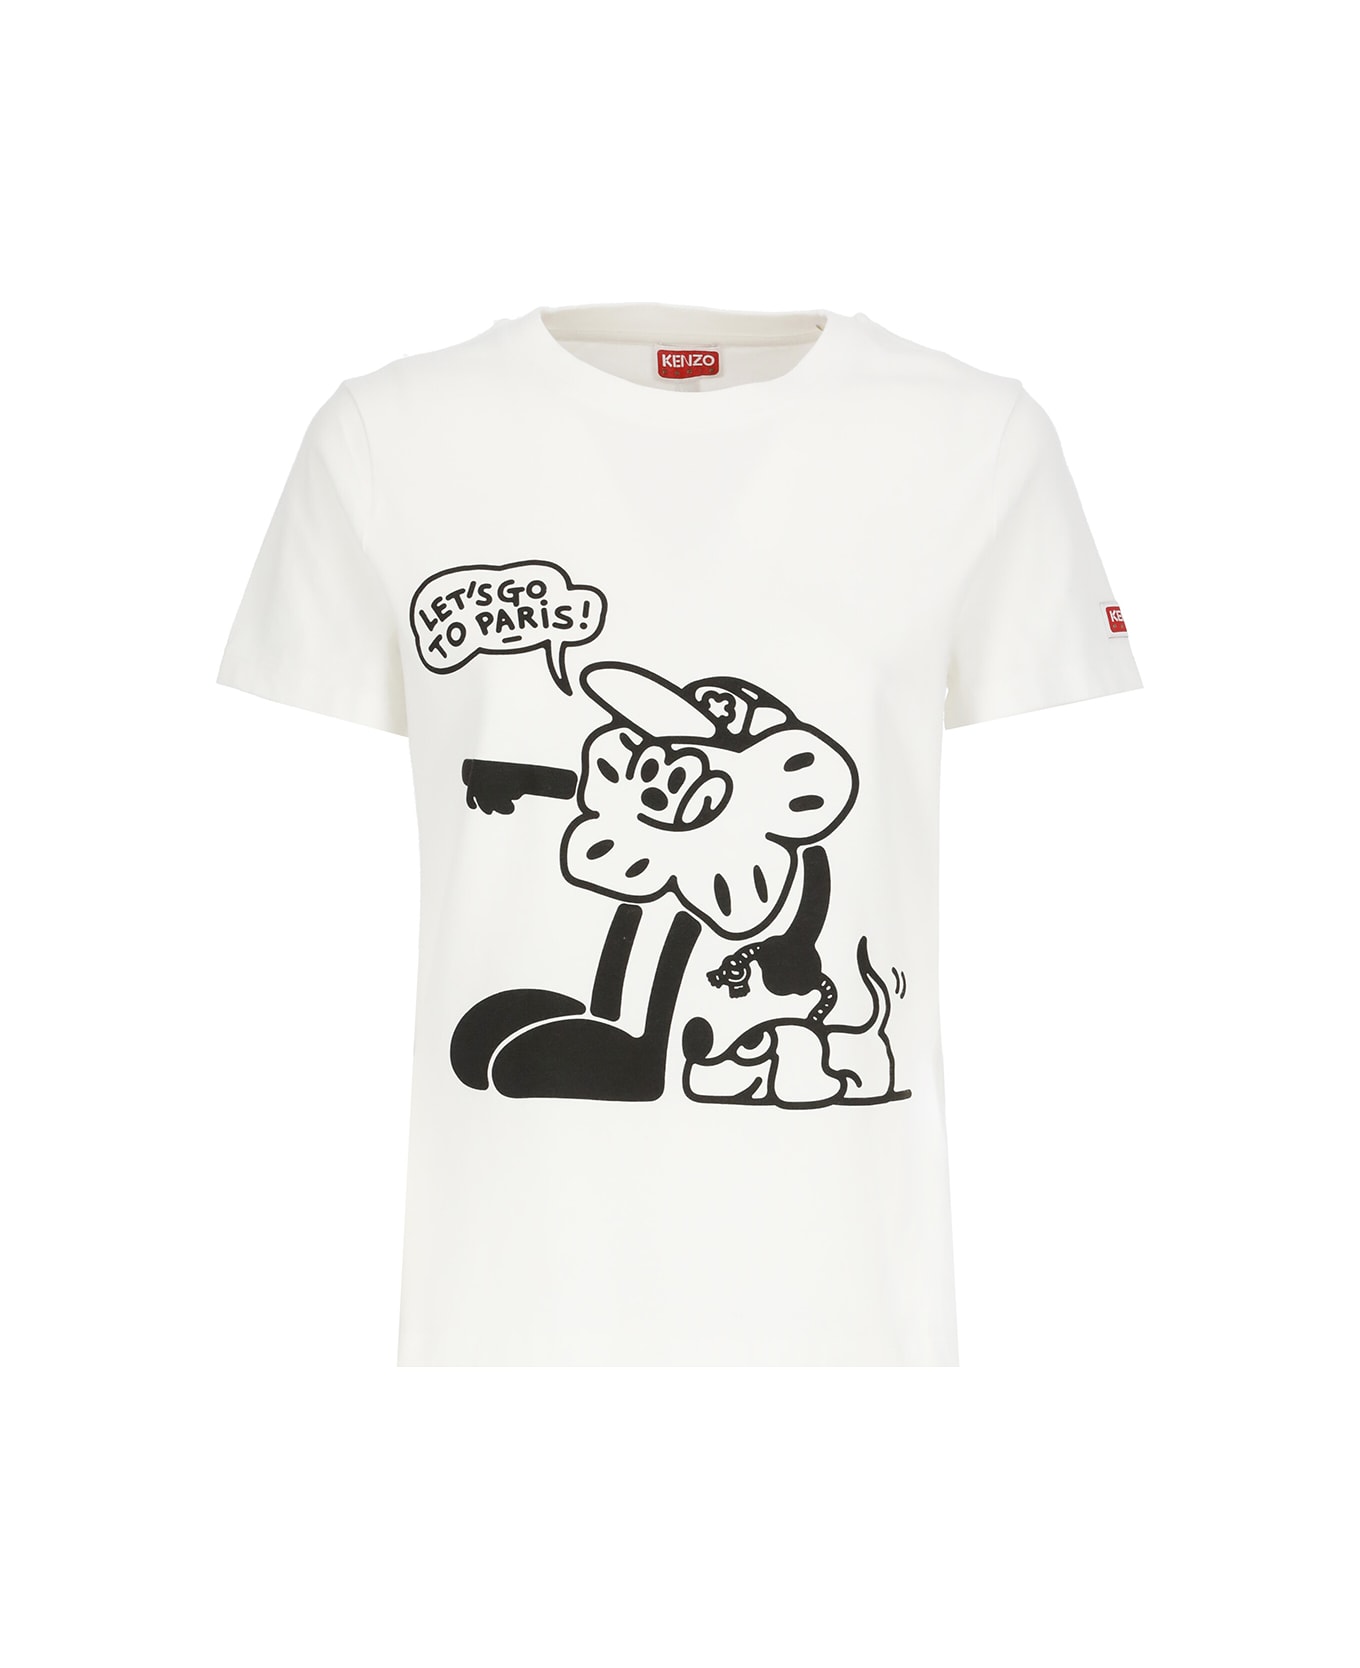 Kenzo T-shirt With Logo Boke Boy Travels | italist, ALWAYS LIKE A SALE